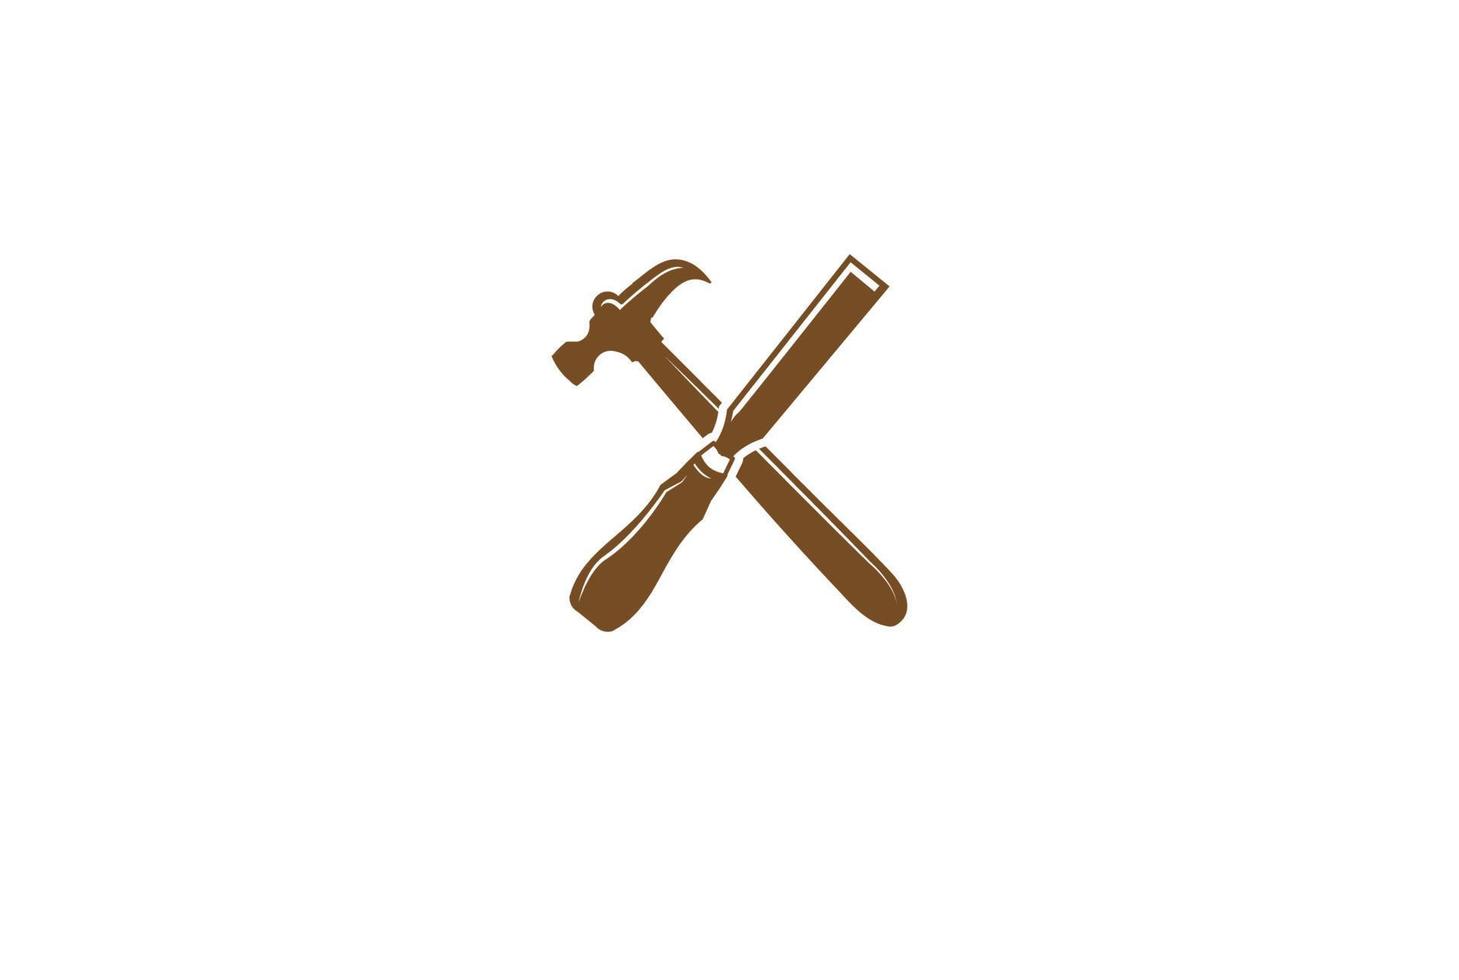 martelo cruzado rústico e cinzel para carpinteiro ou vetor de design de logotipo para carpintaria